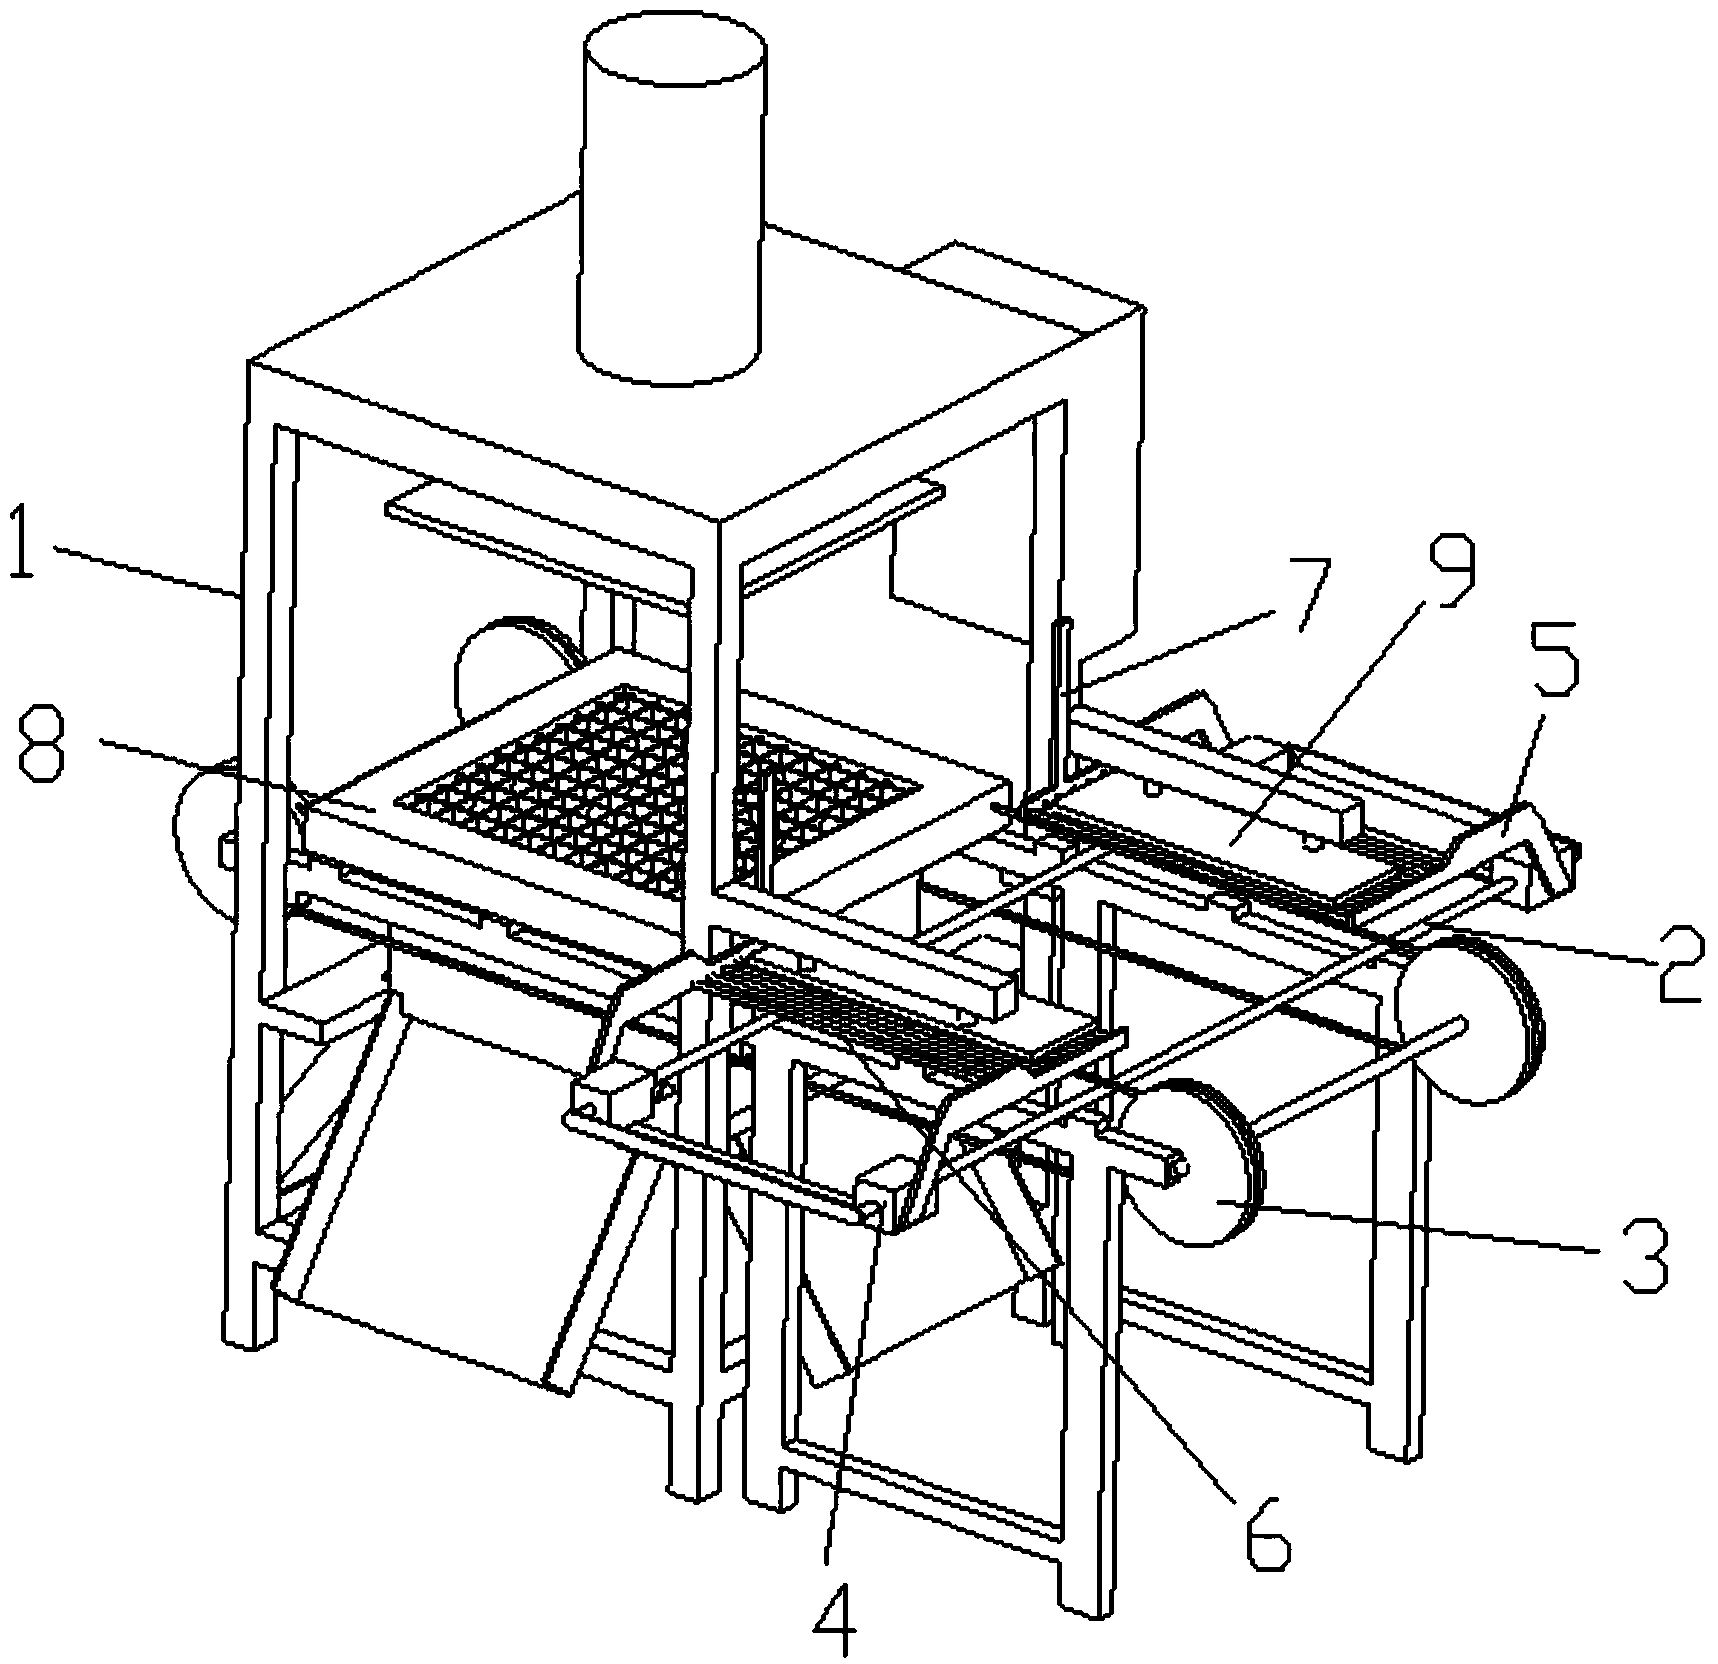 Feeding mechanism of dried bean curd cutting machine